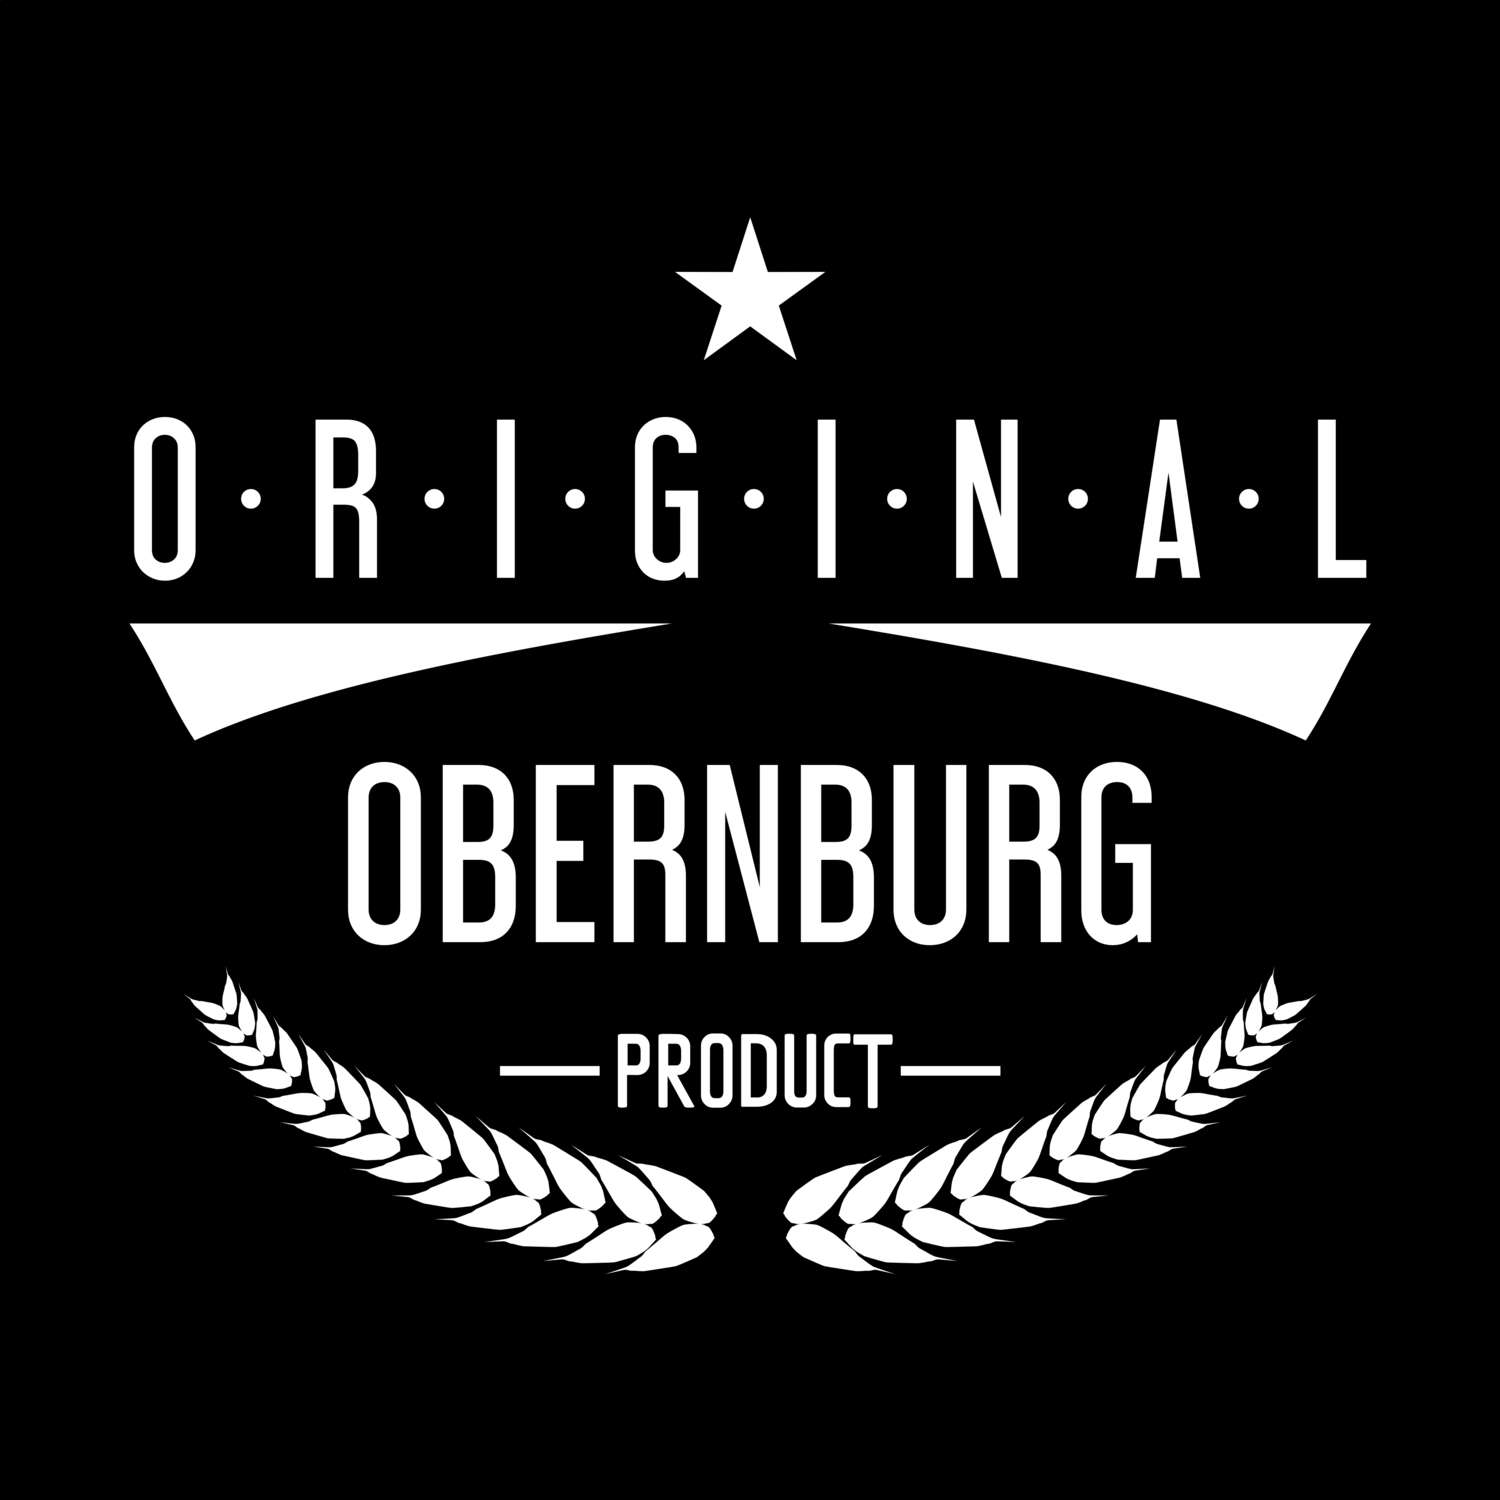 Obernburg T-Shirt »Original Product«